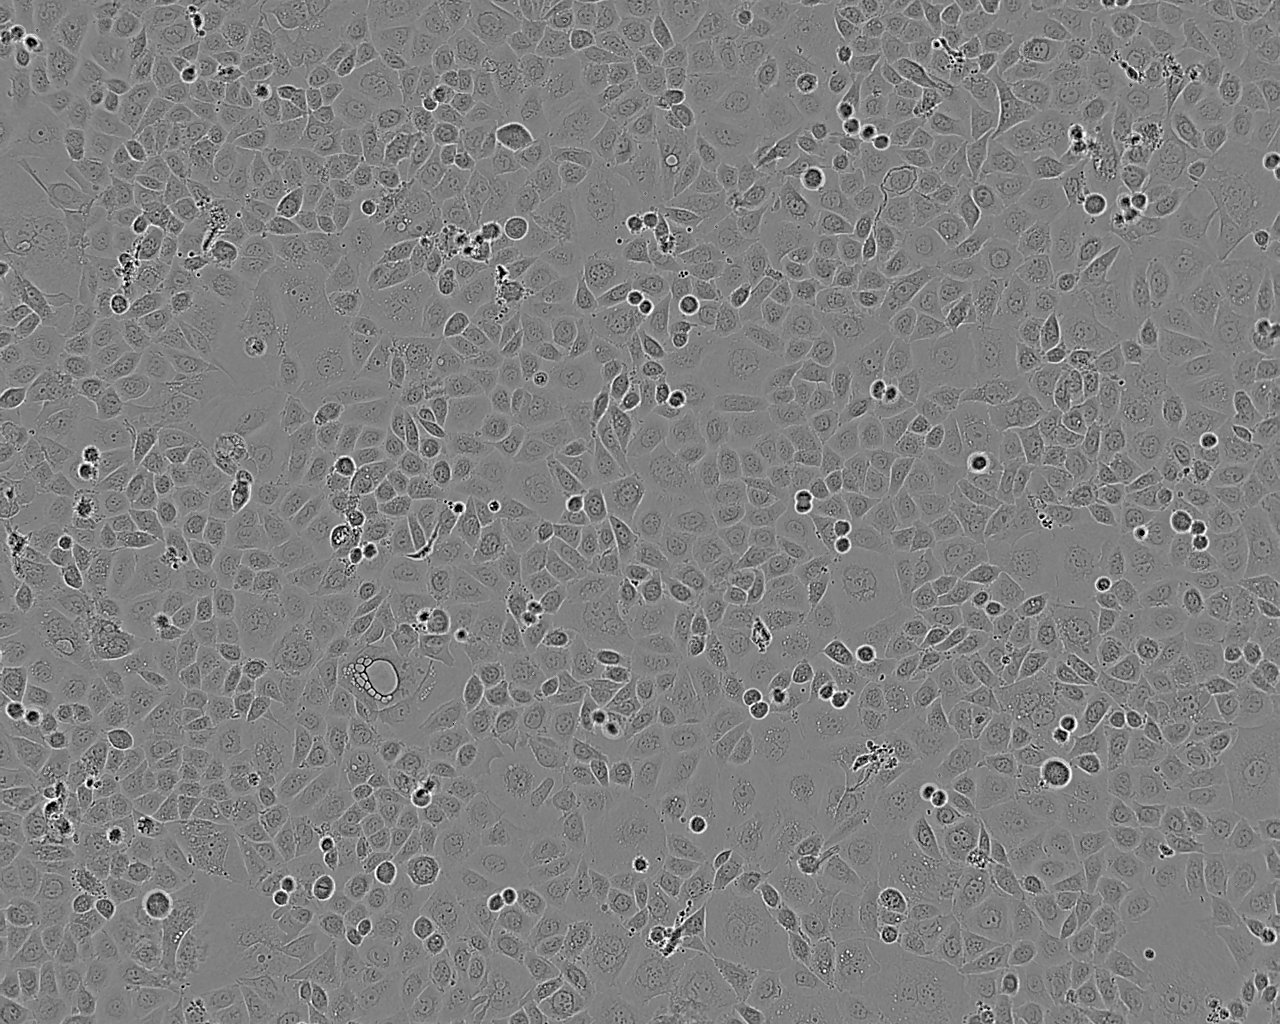 TE-9 epithelioid cells人食管癌细胞系,TE-9 epithelioid cells